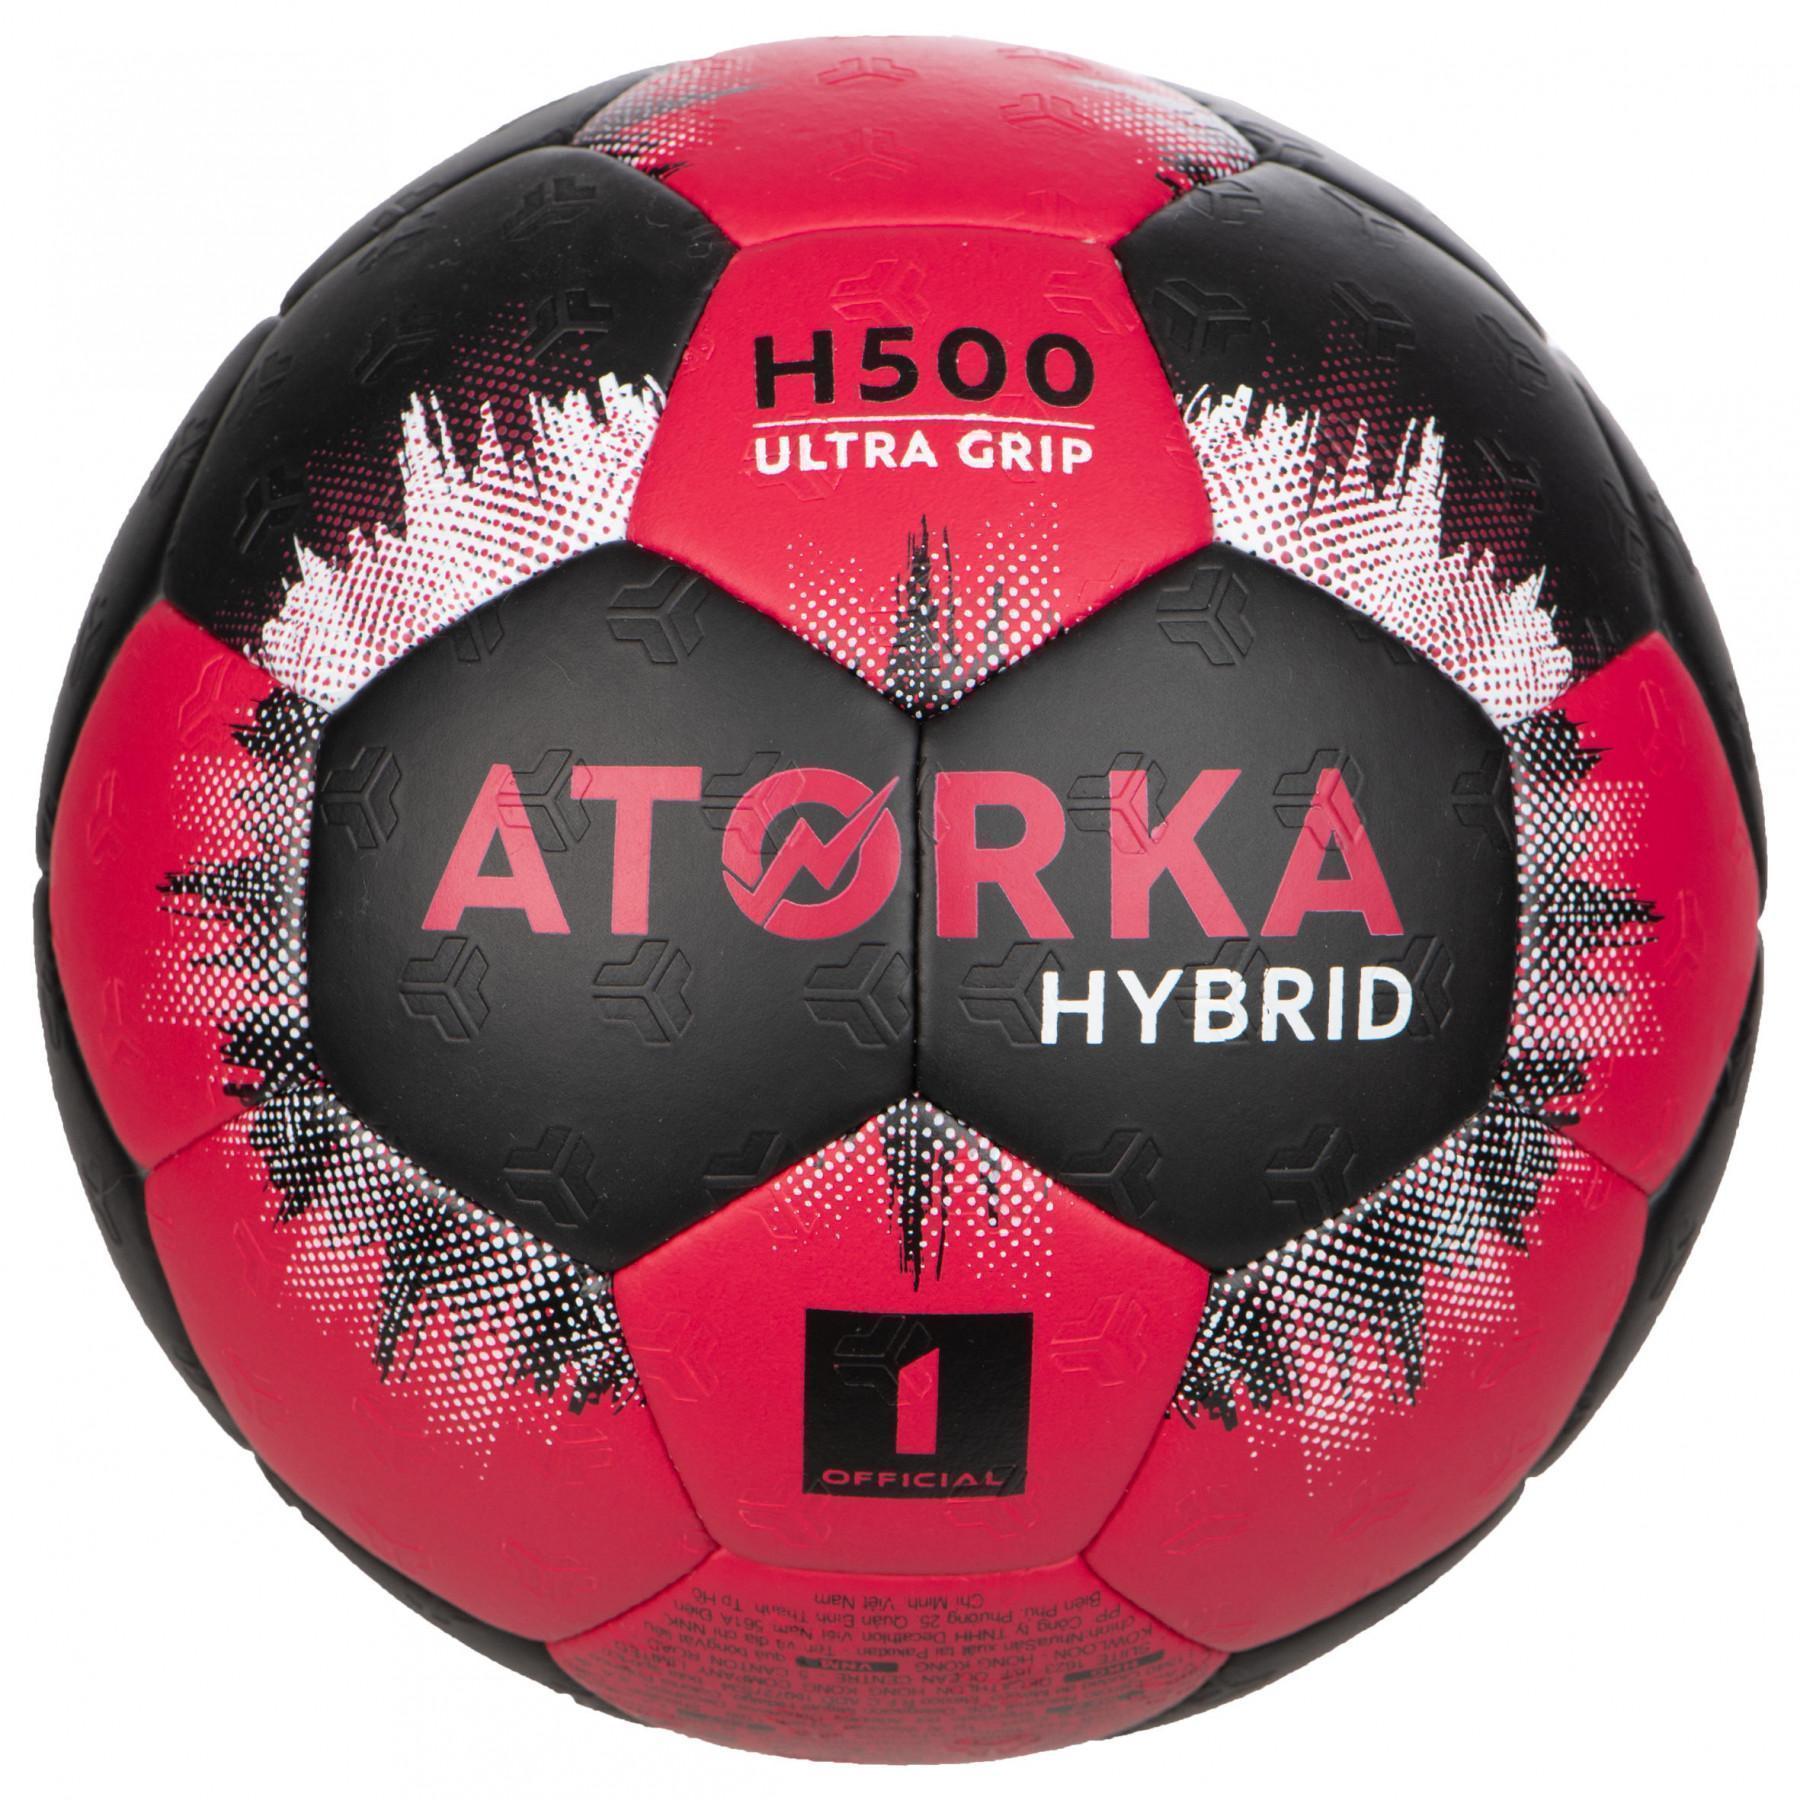 Bola para niños Atorka H500 - Taille 1